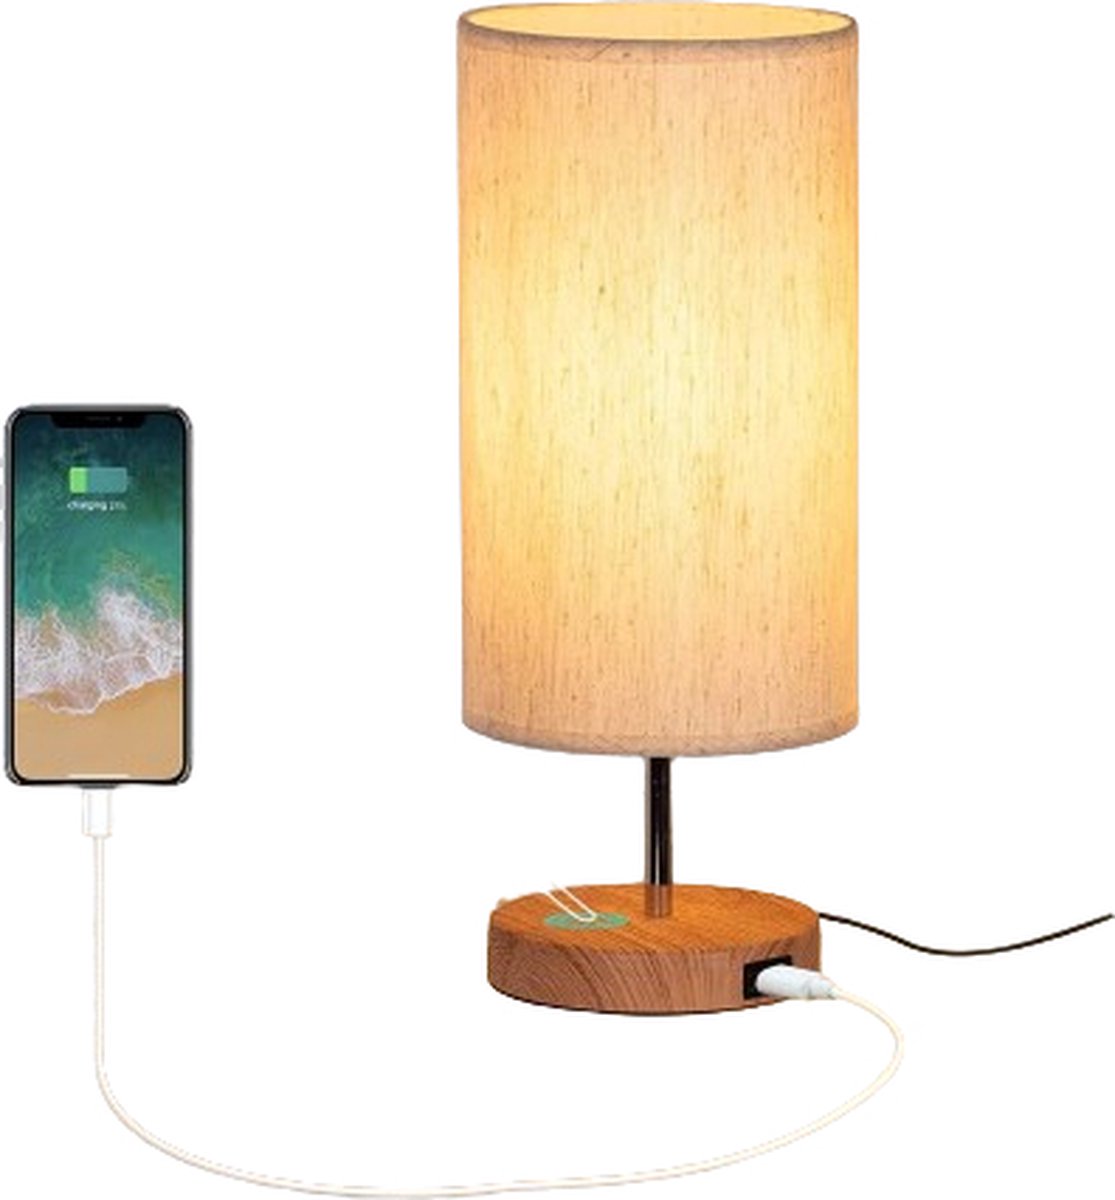 D&B Lamp - Tafellamp - Nachtkast Lamp - Aanraakbediening - 3 kleuren - Dimbaar - Met USB - Oplaadpoort - Tafellamp Slaapkamer - Kantoor